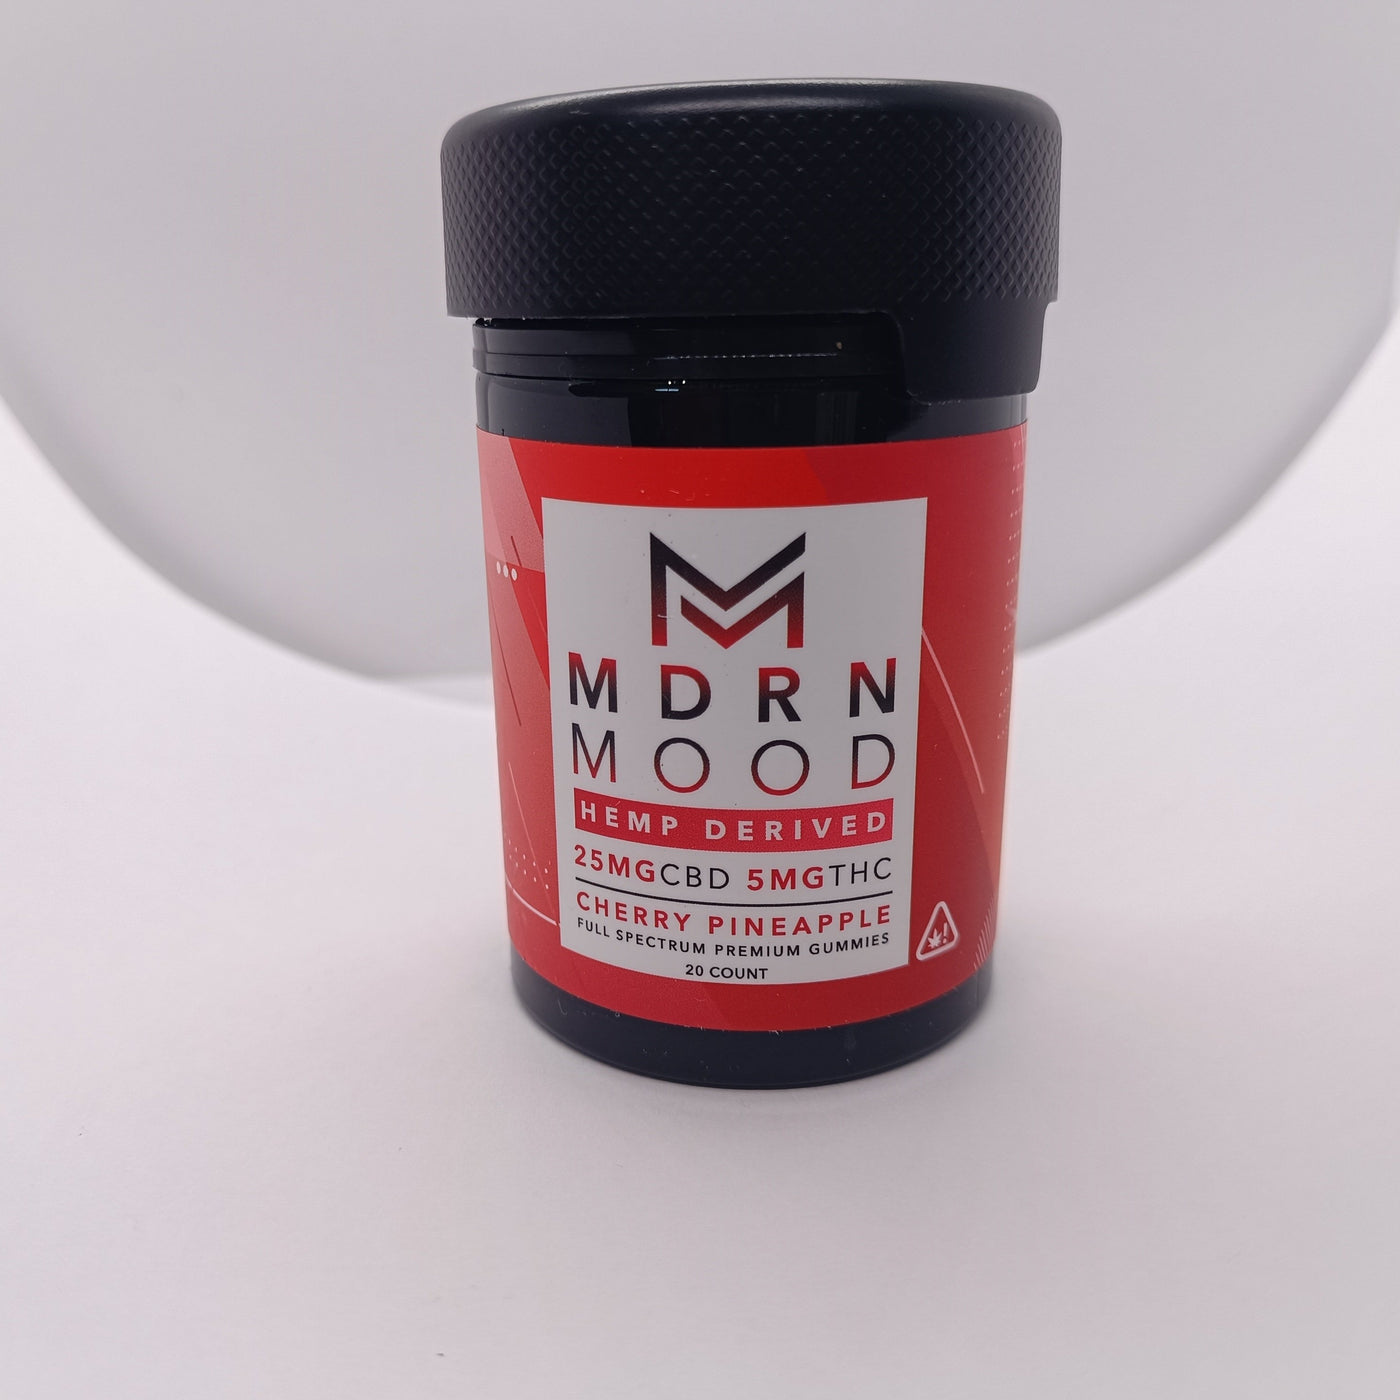 MDRN MOOD - 20 GUMMIES - 25mg CBD/5mg THC - CHERRY PINEAPPLE